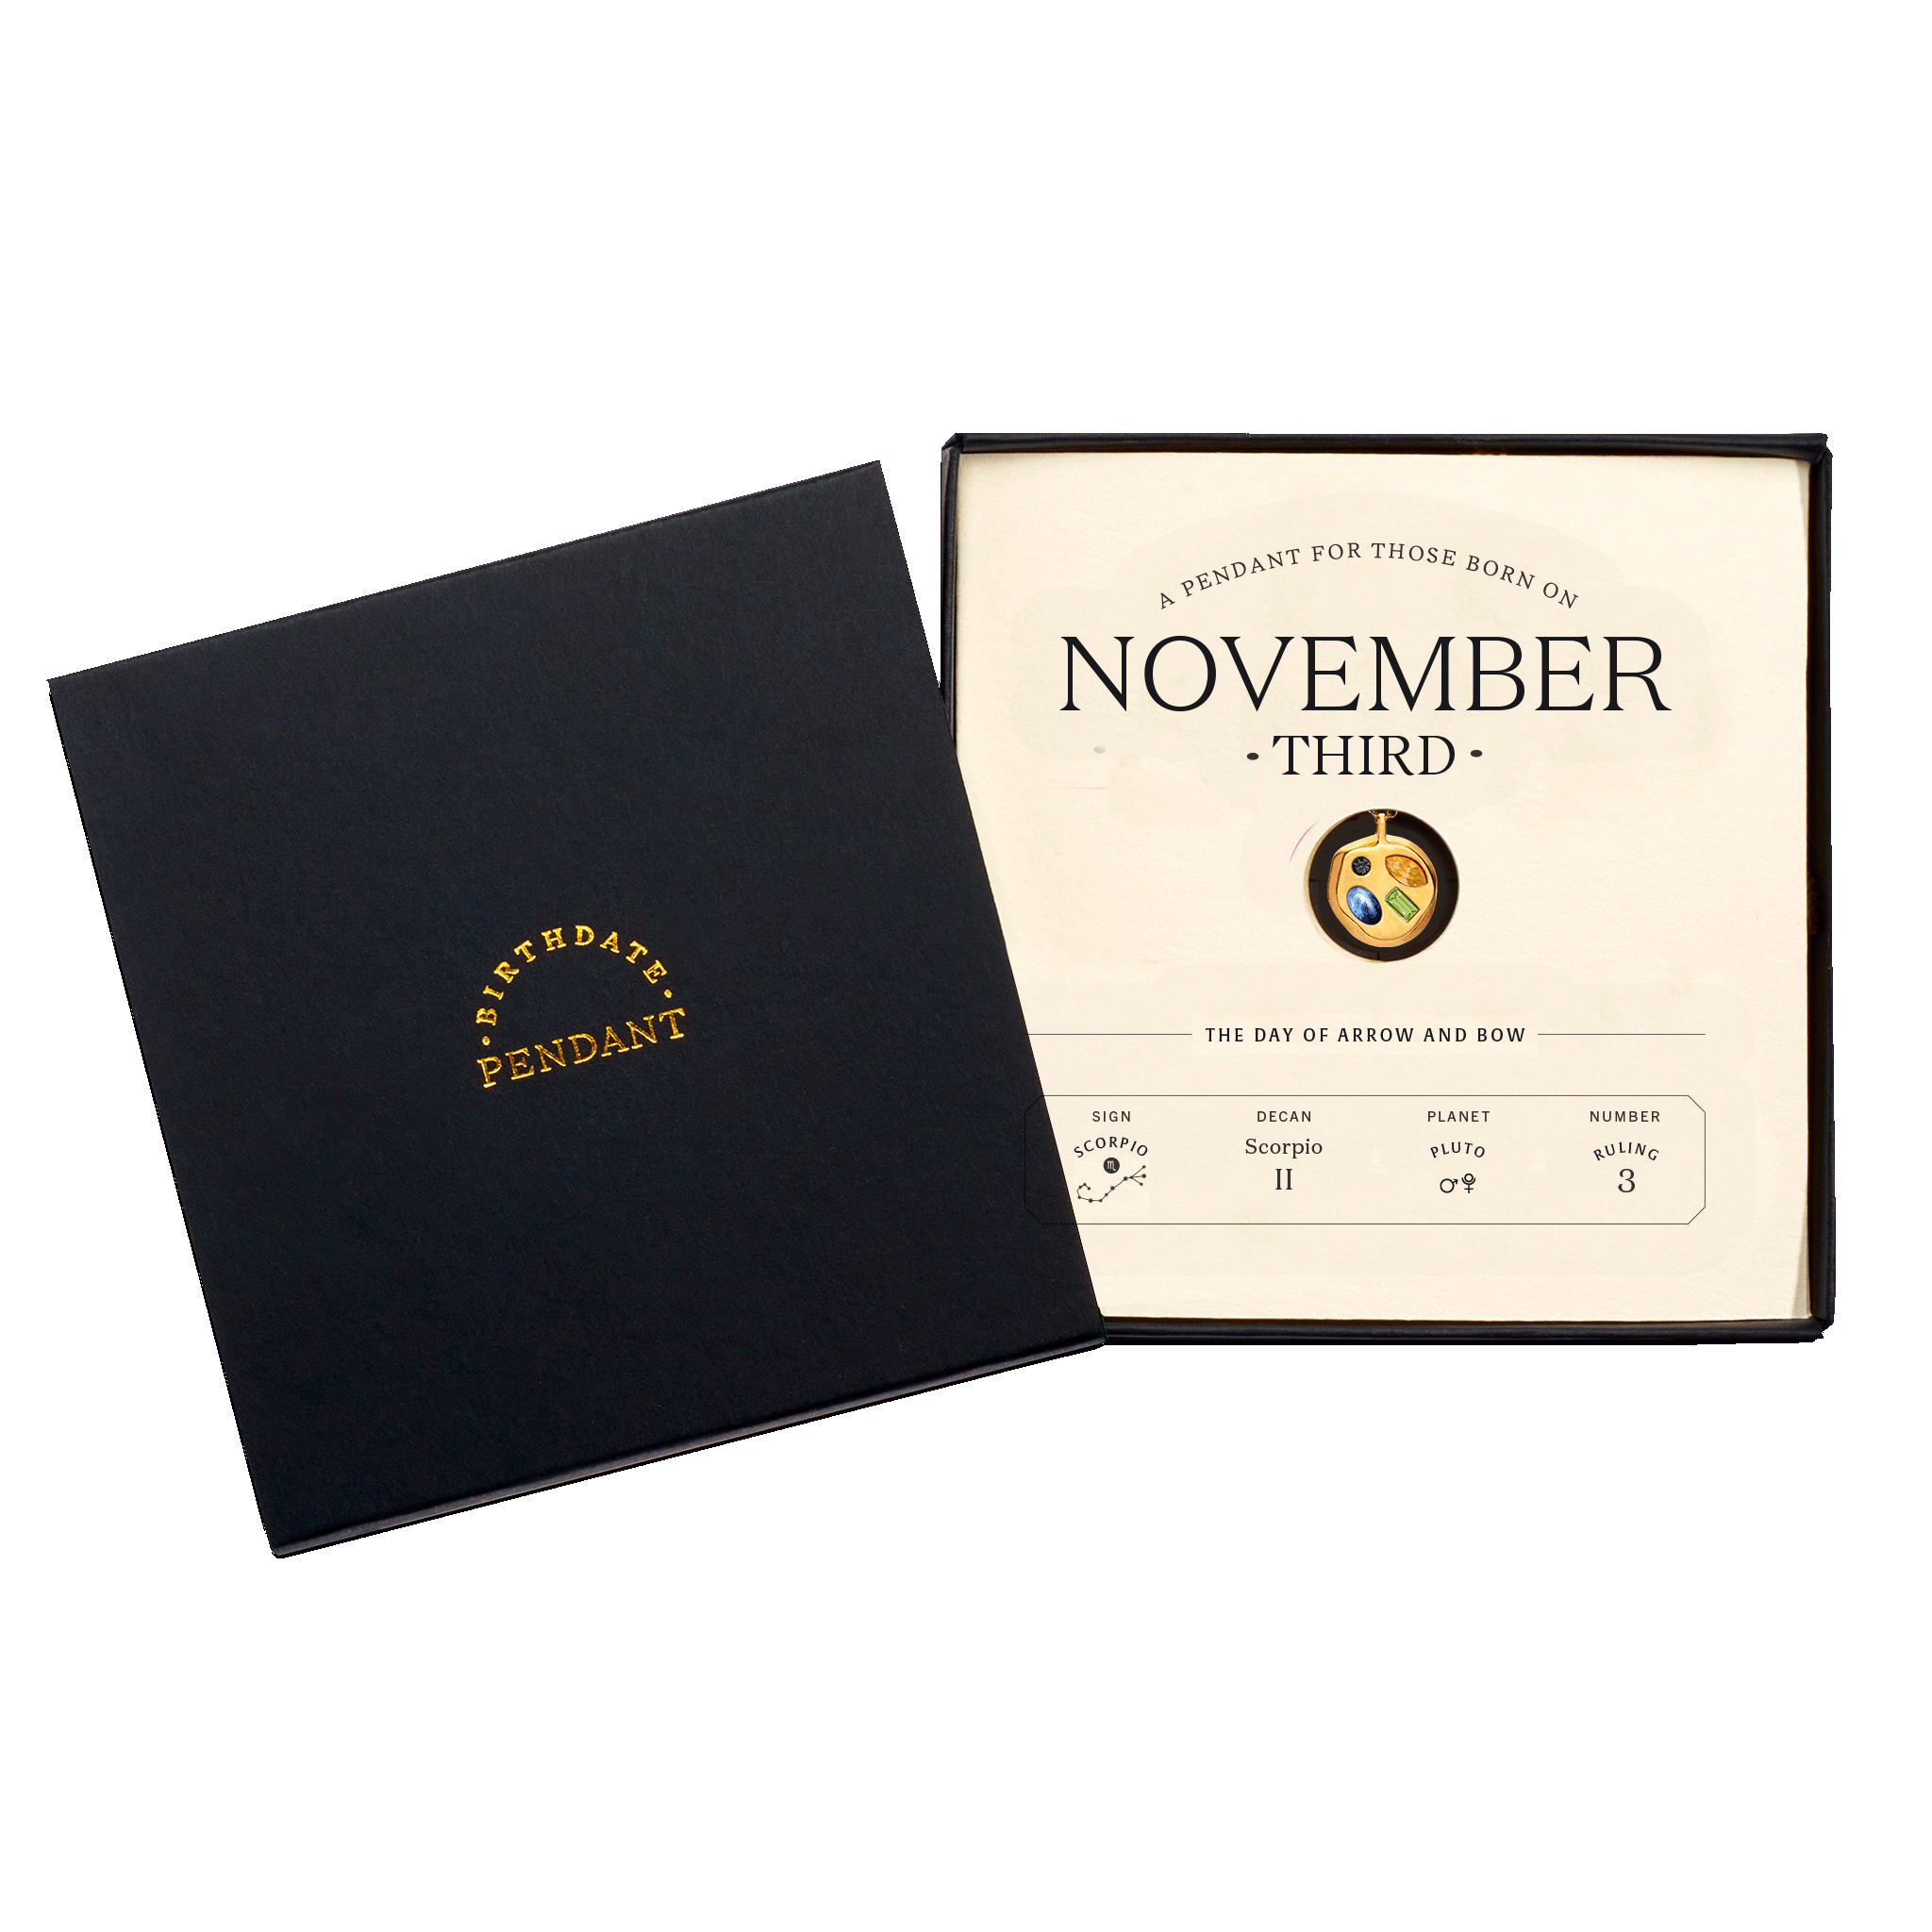 The November Third Pendant inside its box